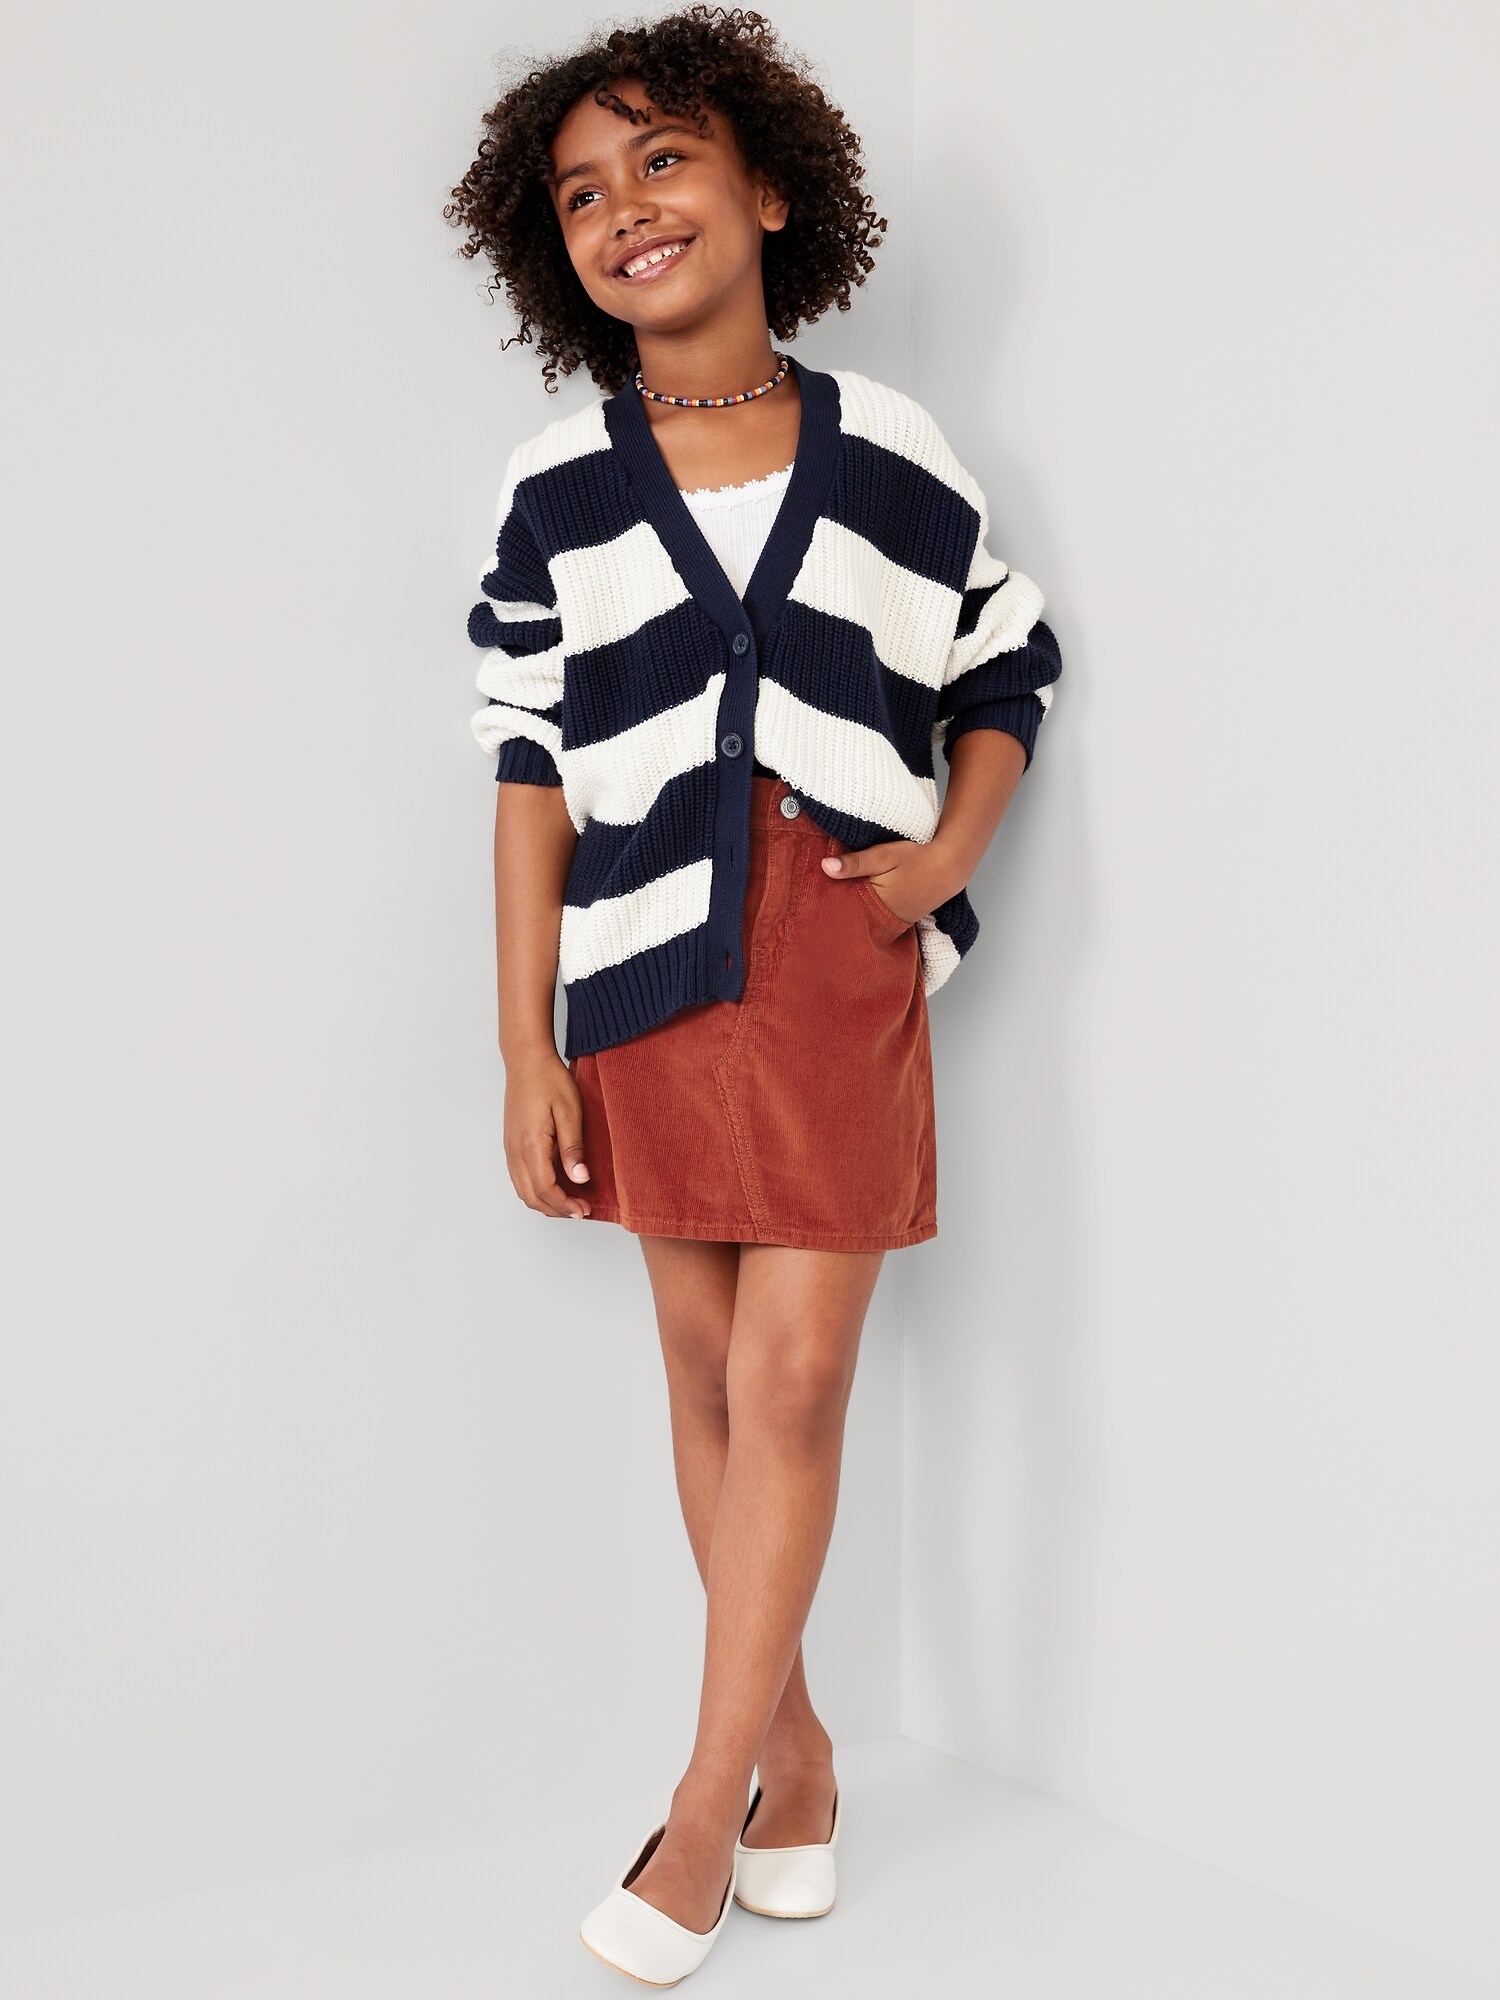 High-Waisted Corduroy Skirt for Girls | Old Navy